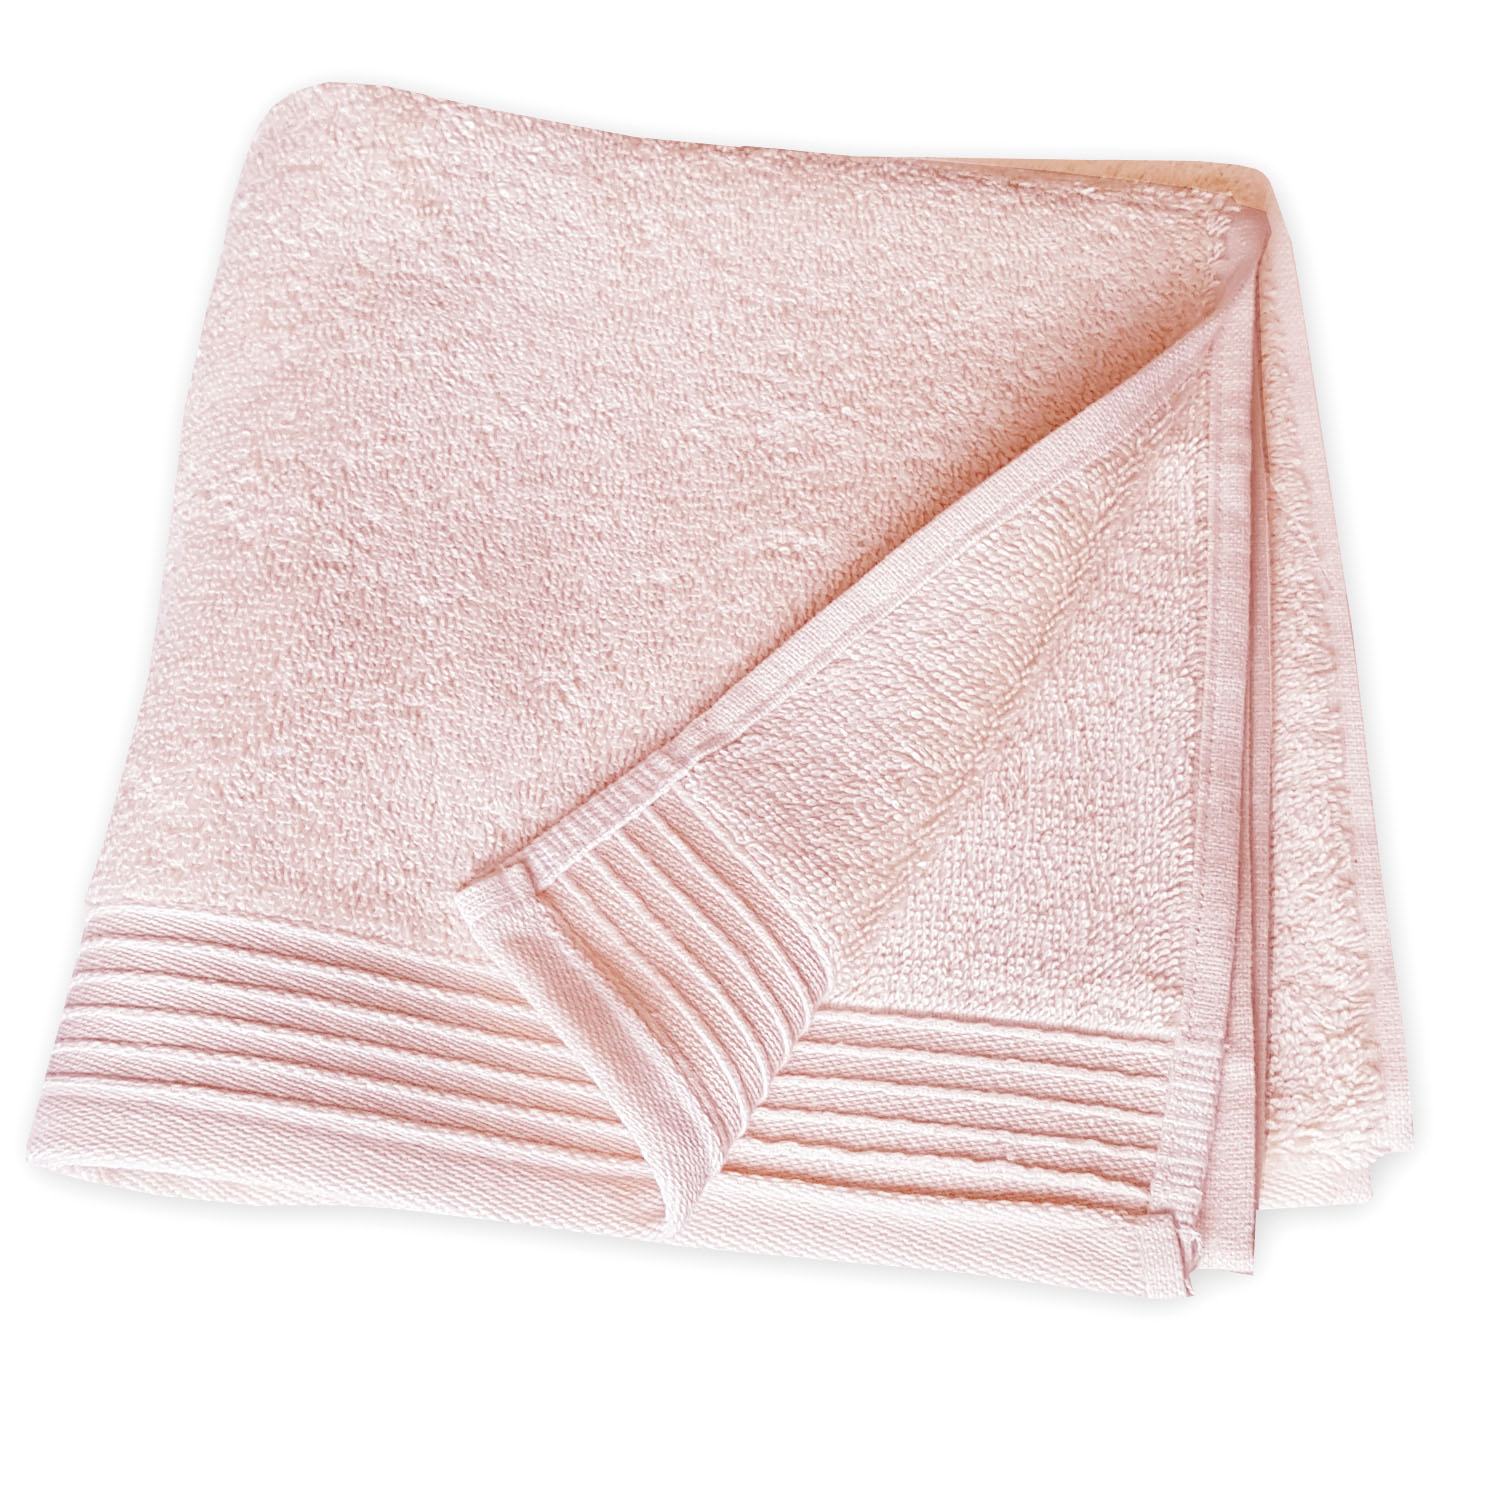 Premium Glanz- Framsohn und Handtücher Badetücher Rose edlem mit Quartz- Flauschige